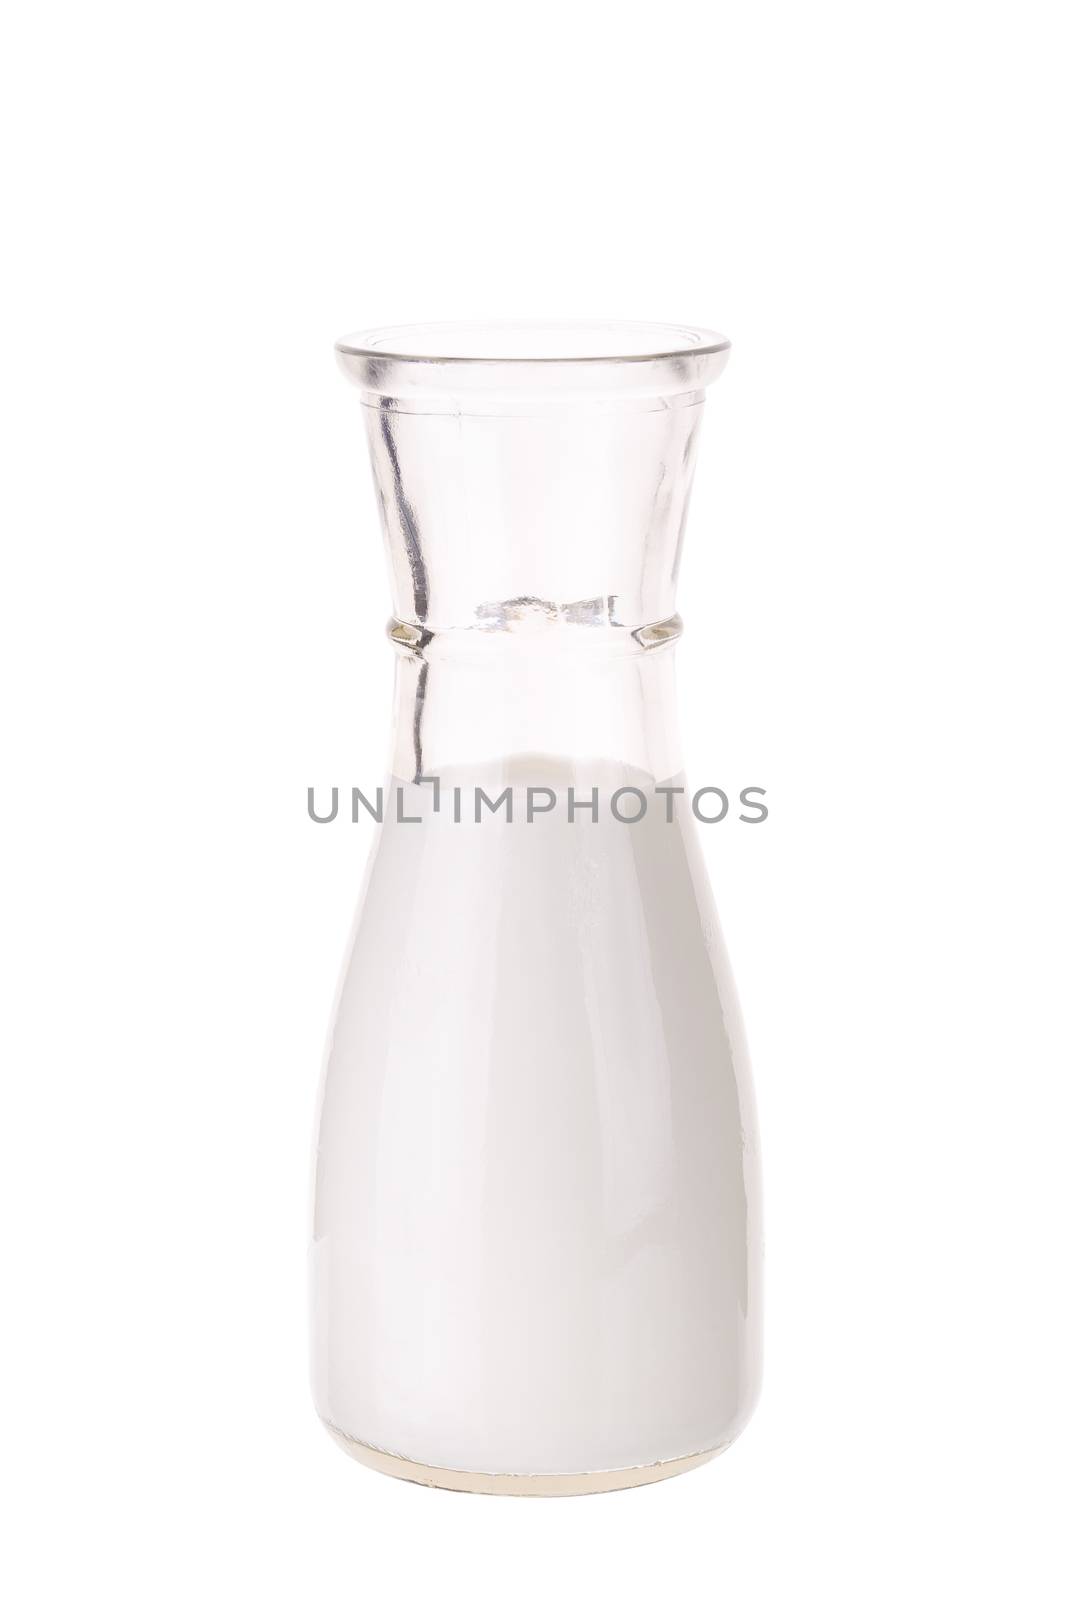 Glass Milk Bottle isolated on white background